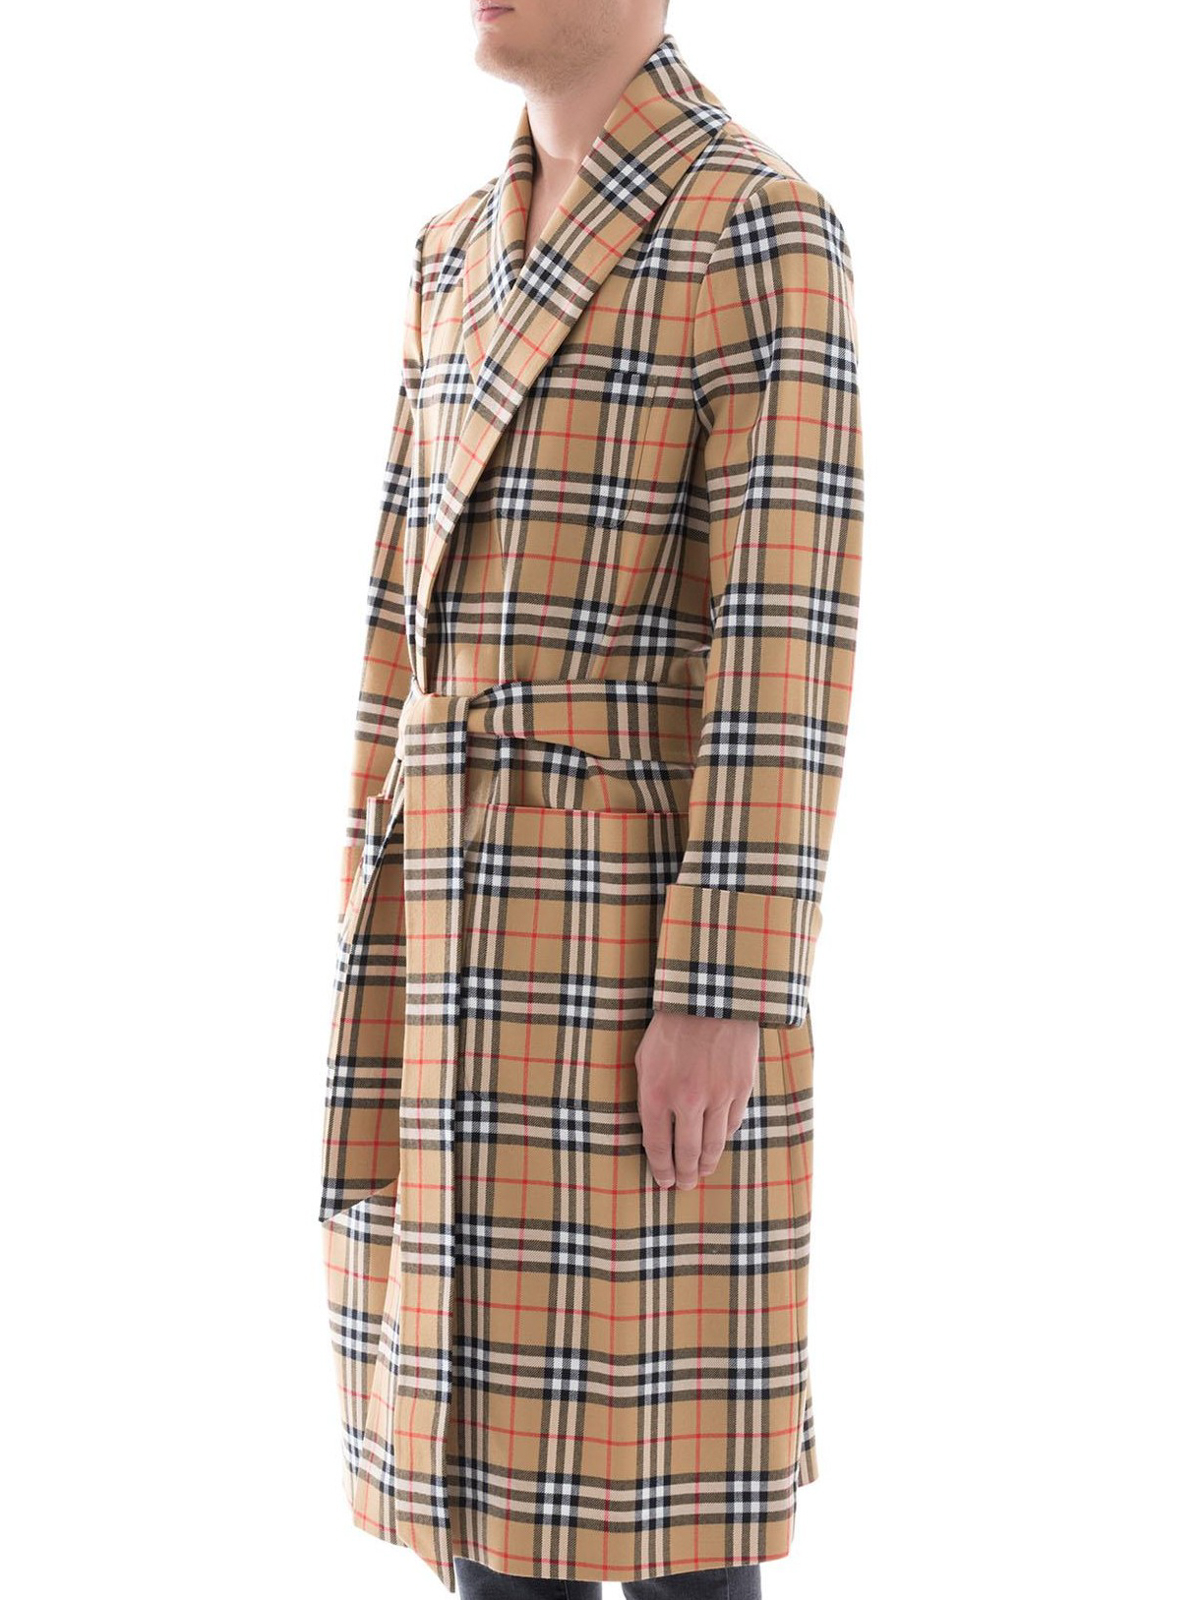 burberry check wool coat